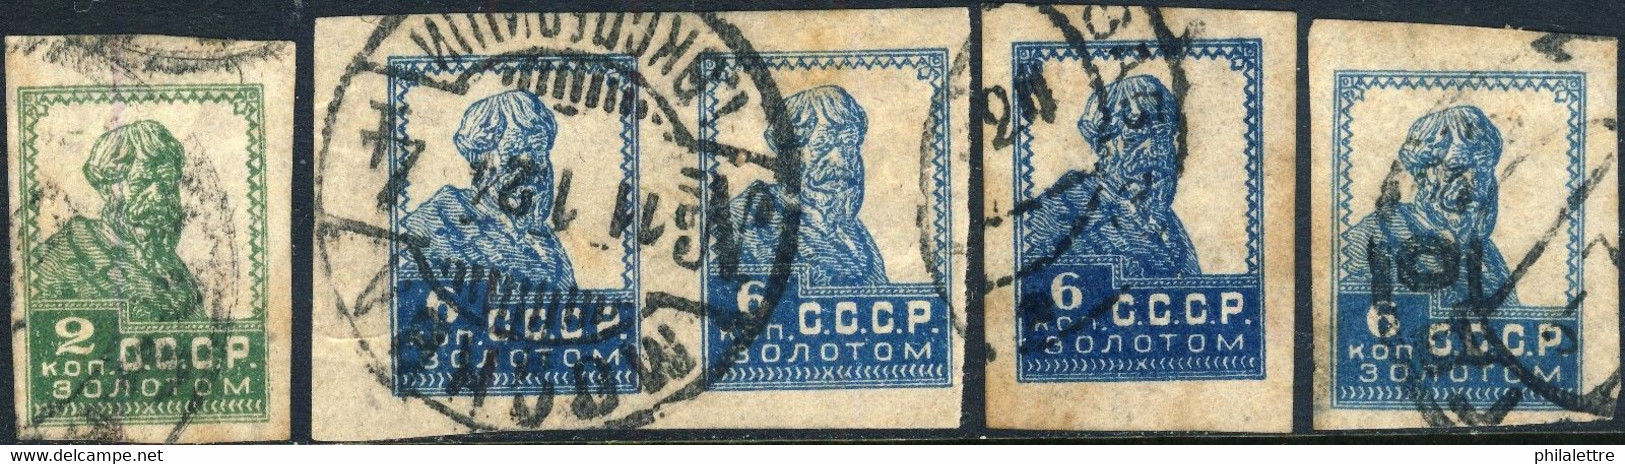 URSS / USSR - Soviet Union - 1923/4 - Mi.229.1 & 4xMi.233.I Imperf / No Wmk - VFU - Usados